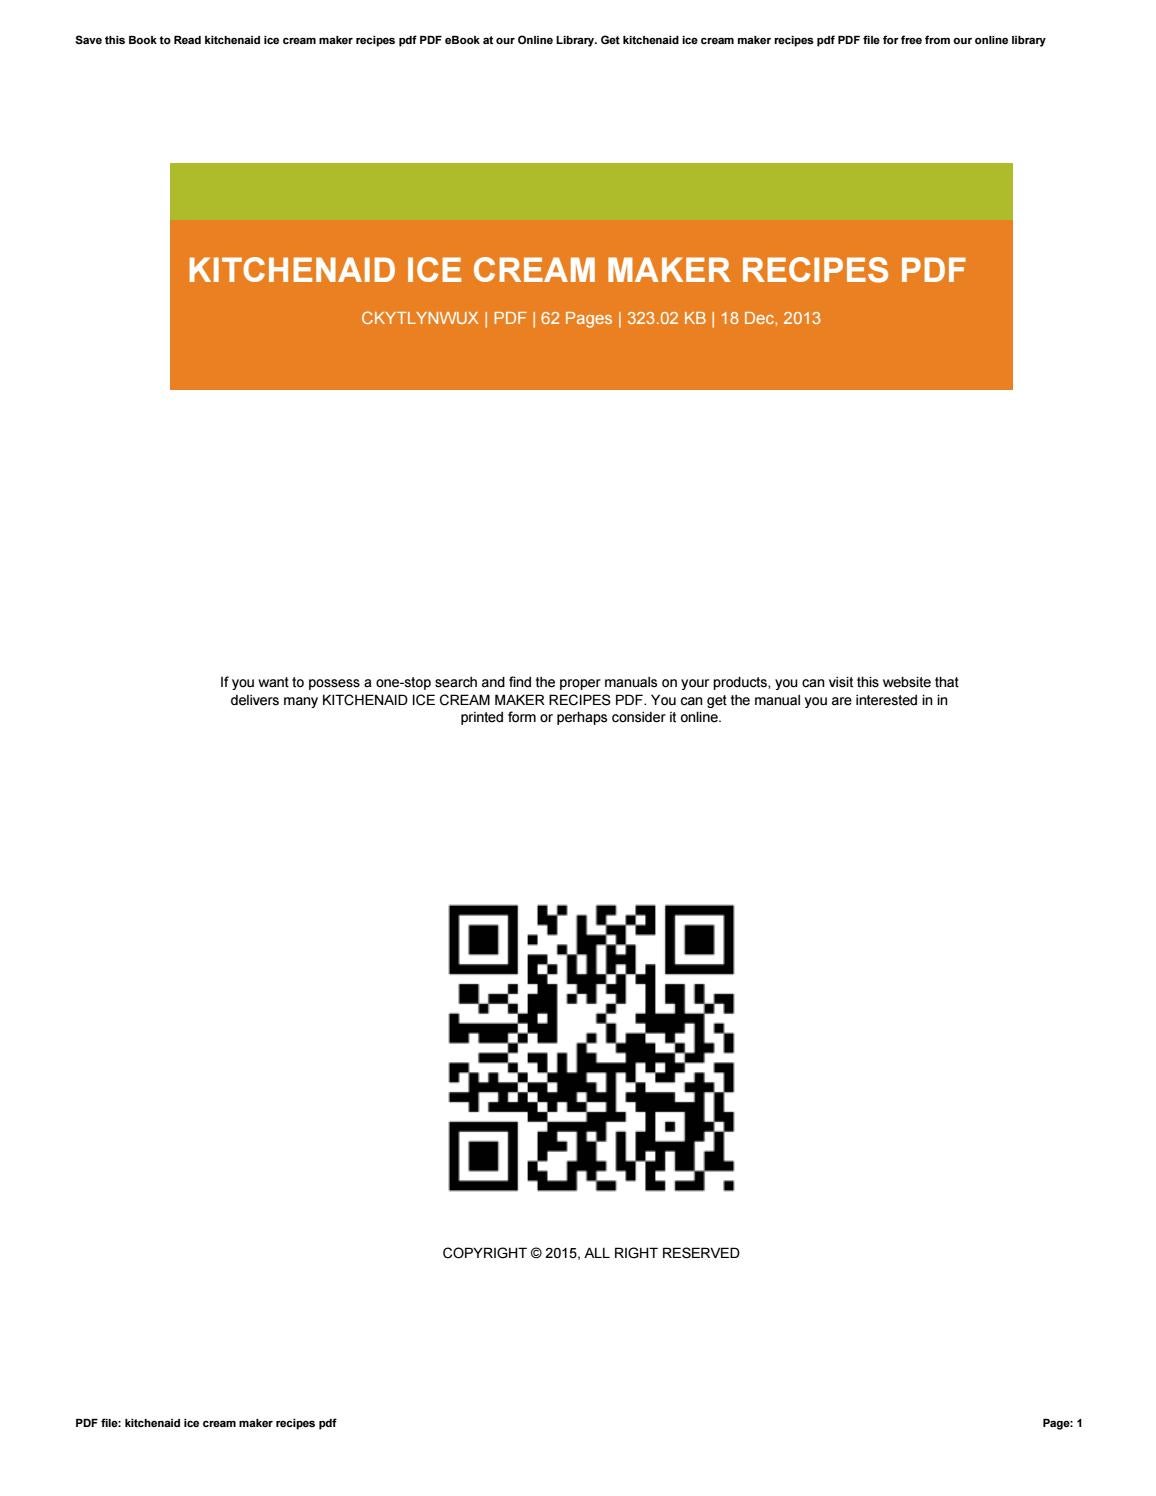 kitchenaid ice cream maker instructions pdf